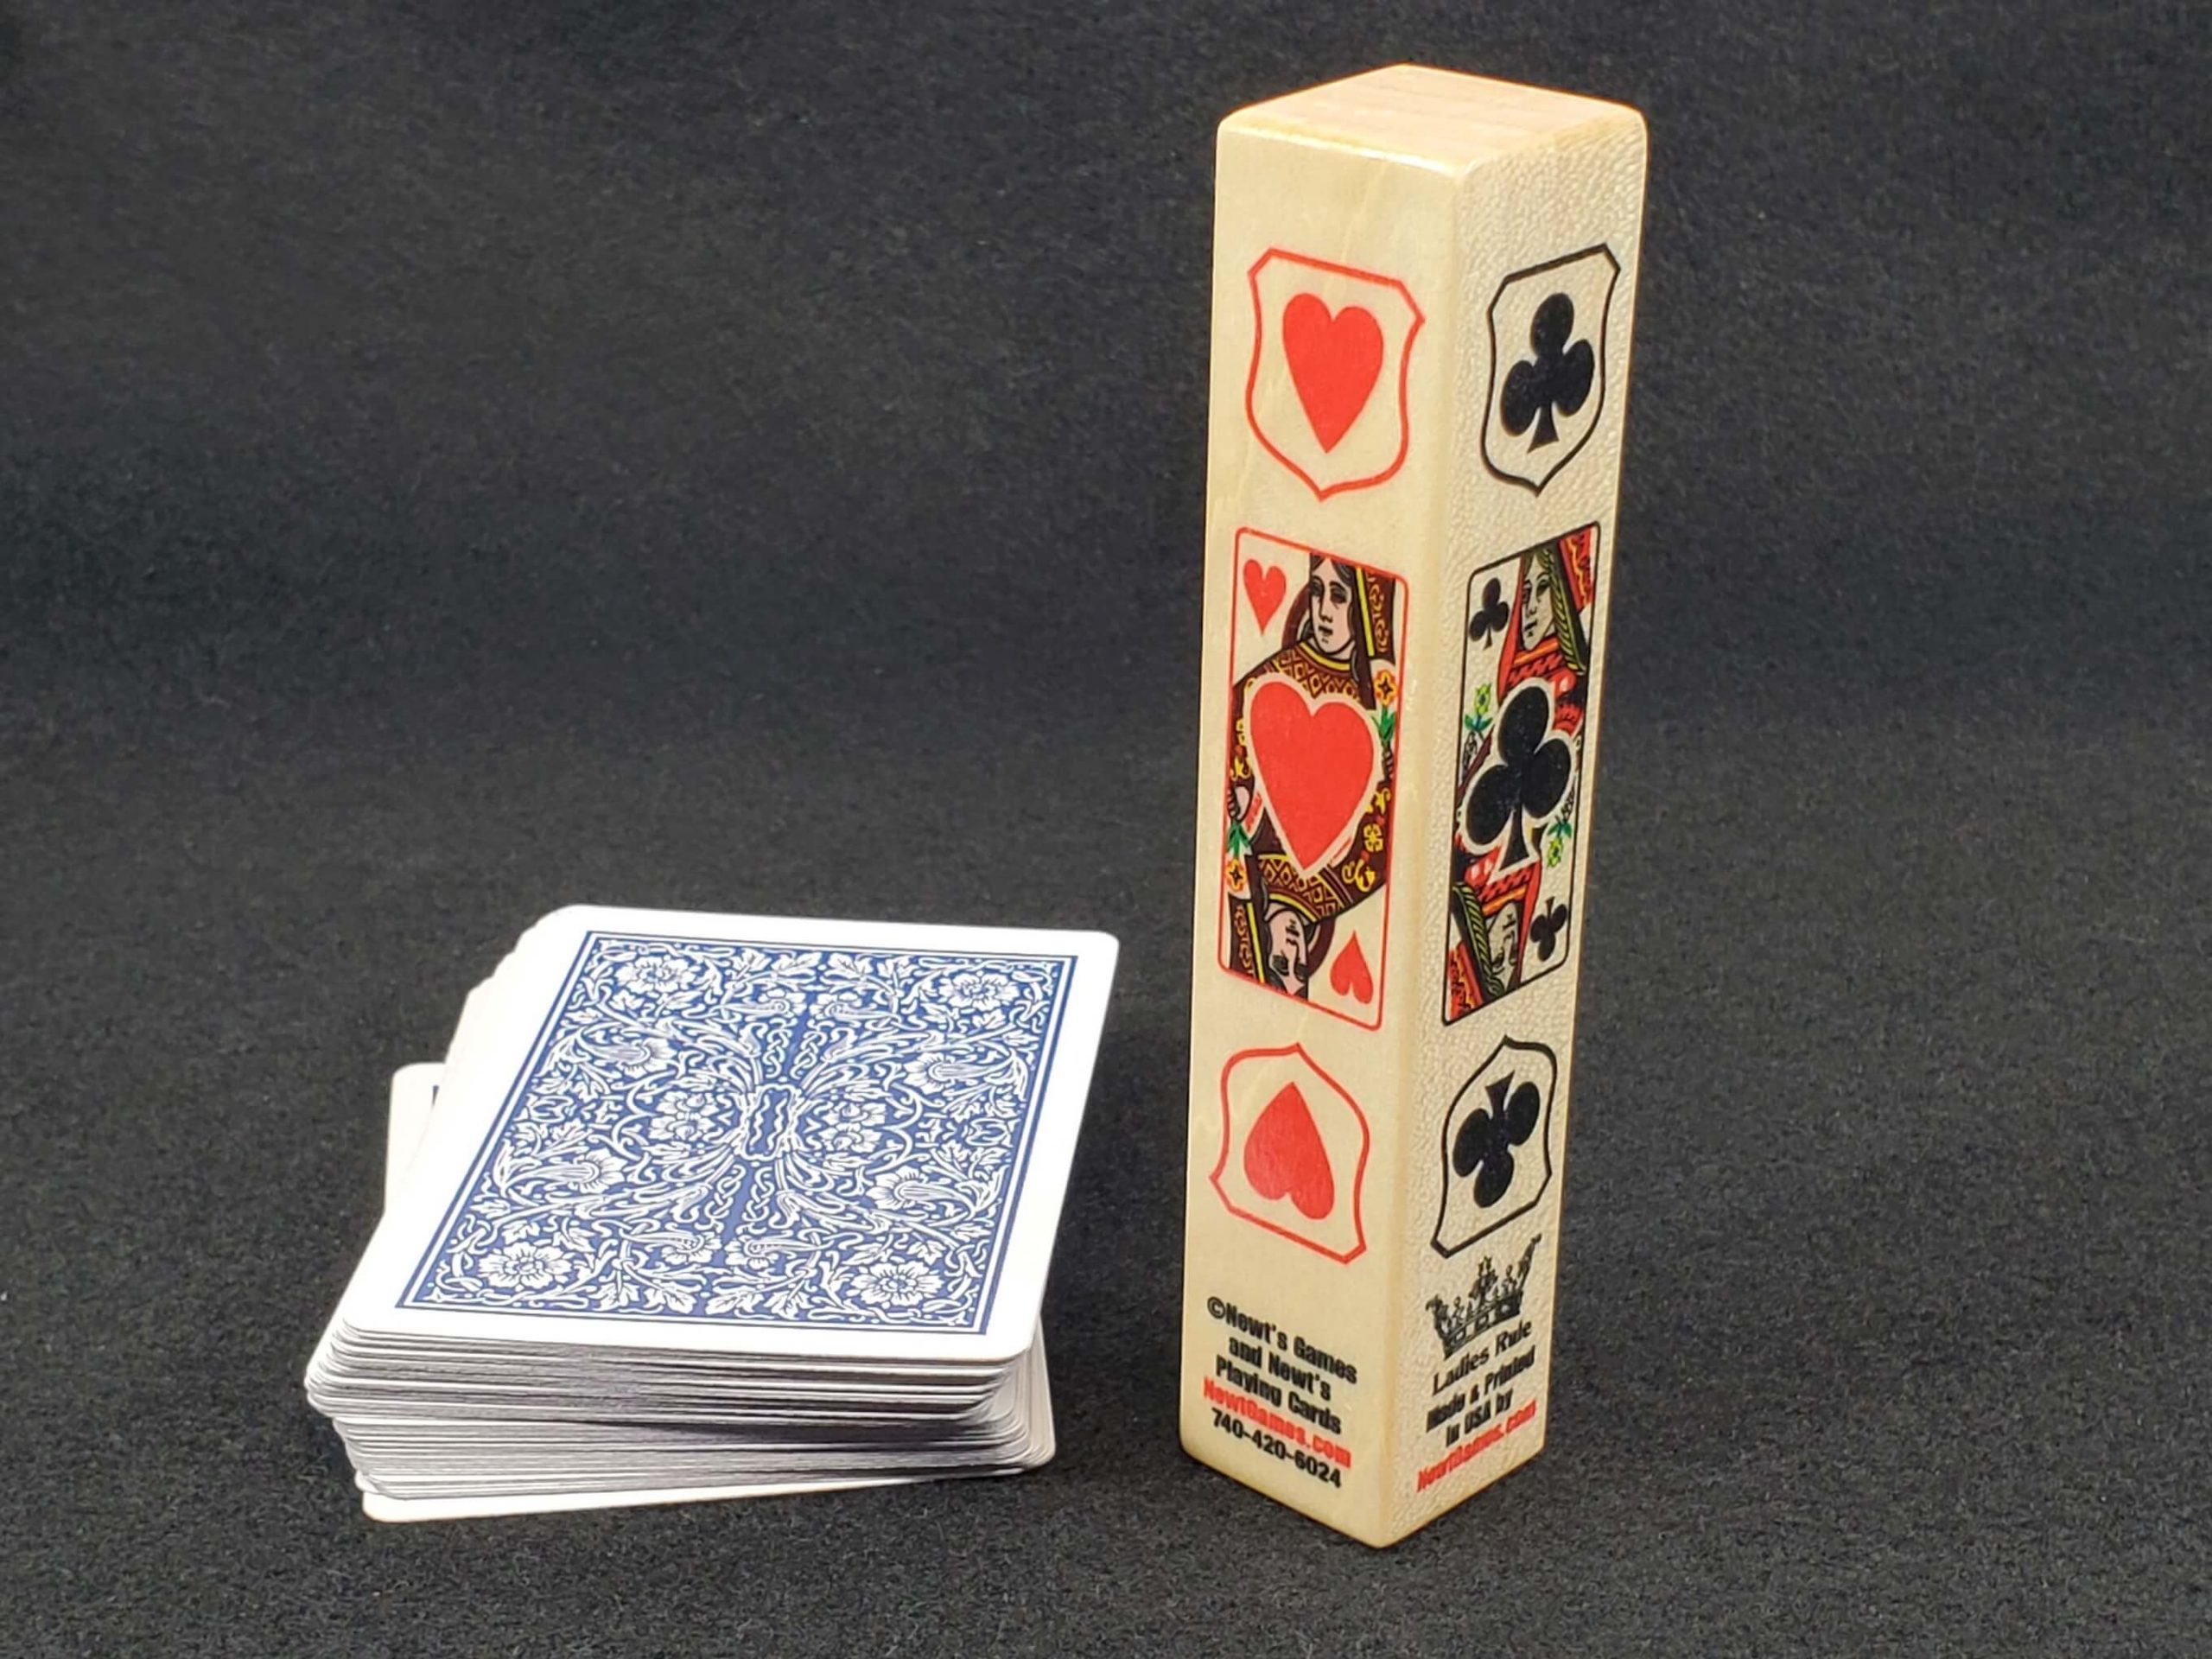 Cartamundi - Playing cards, card games, and board games